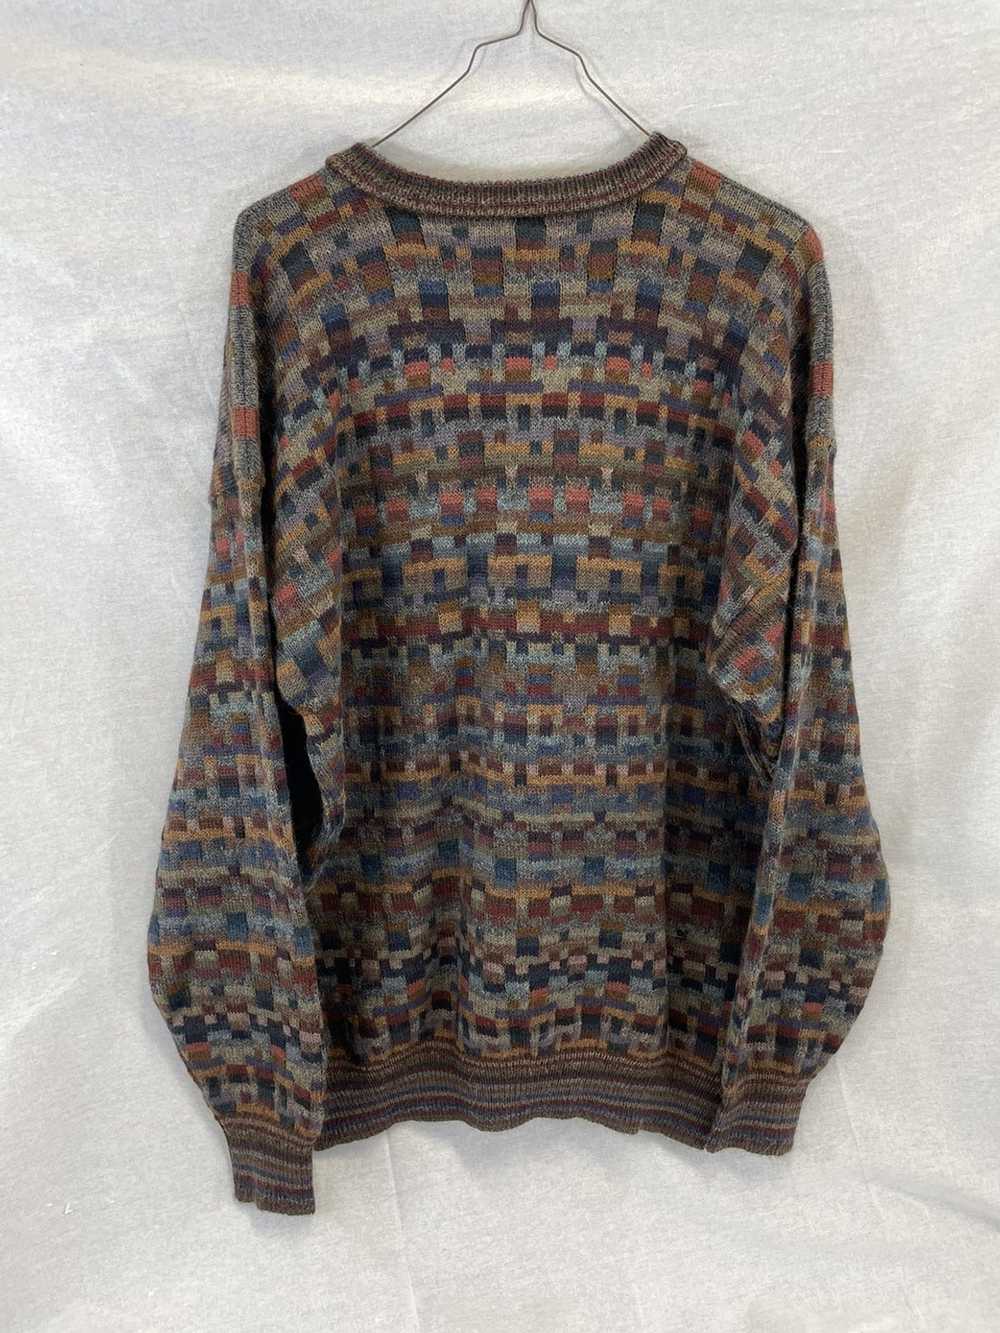 Vintage Vintage 90s/Coogi style sweater - image 2